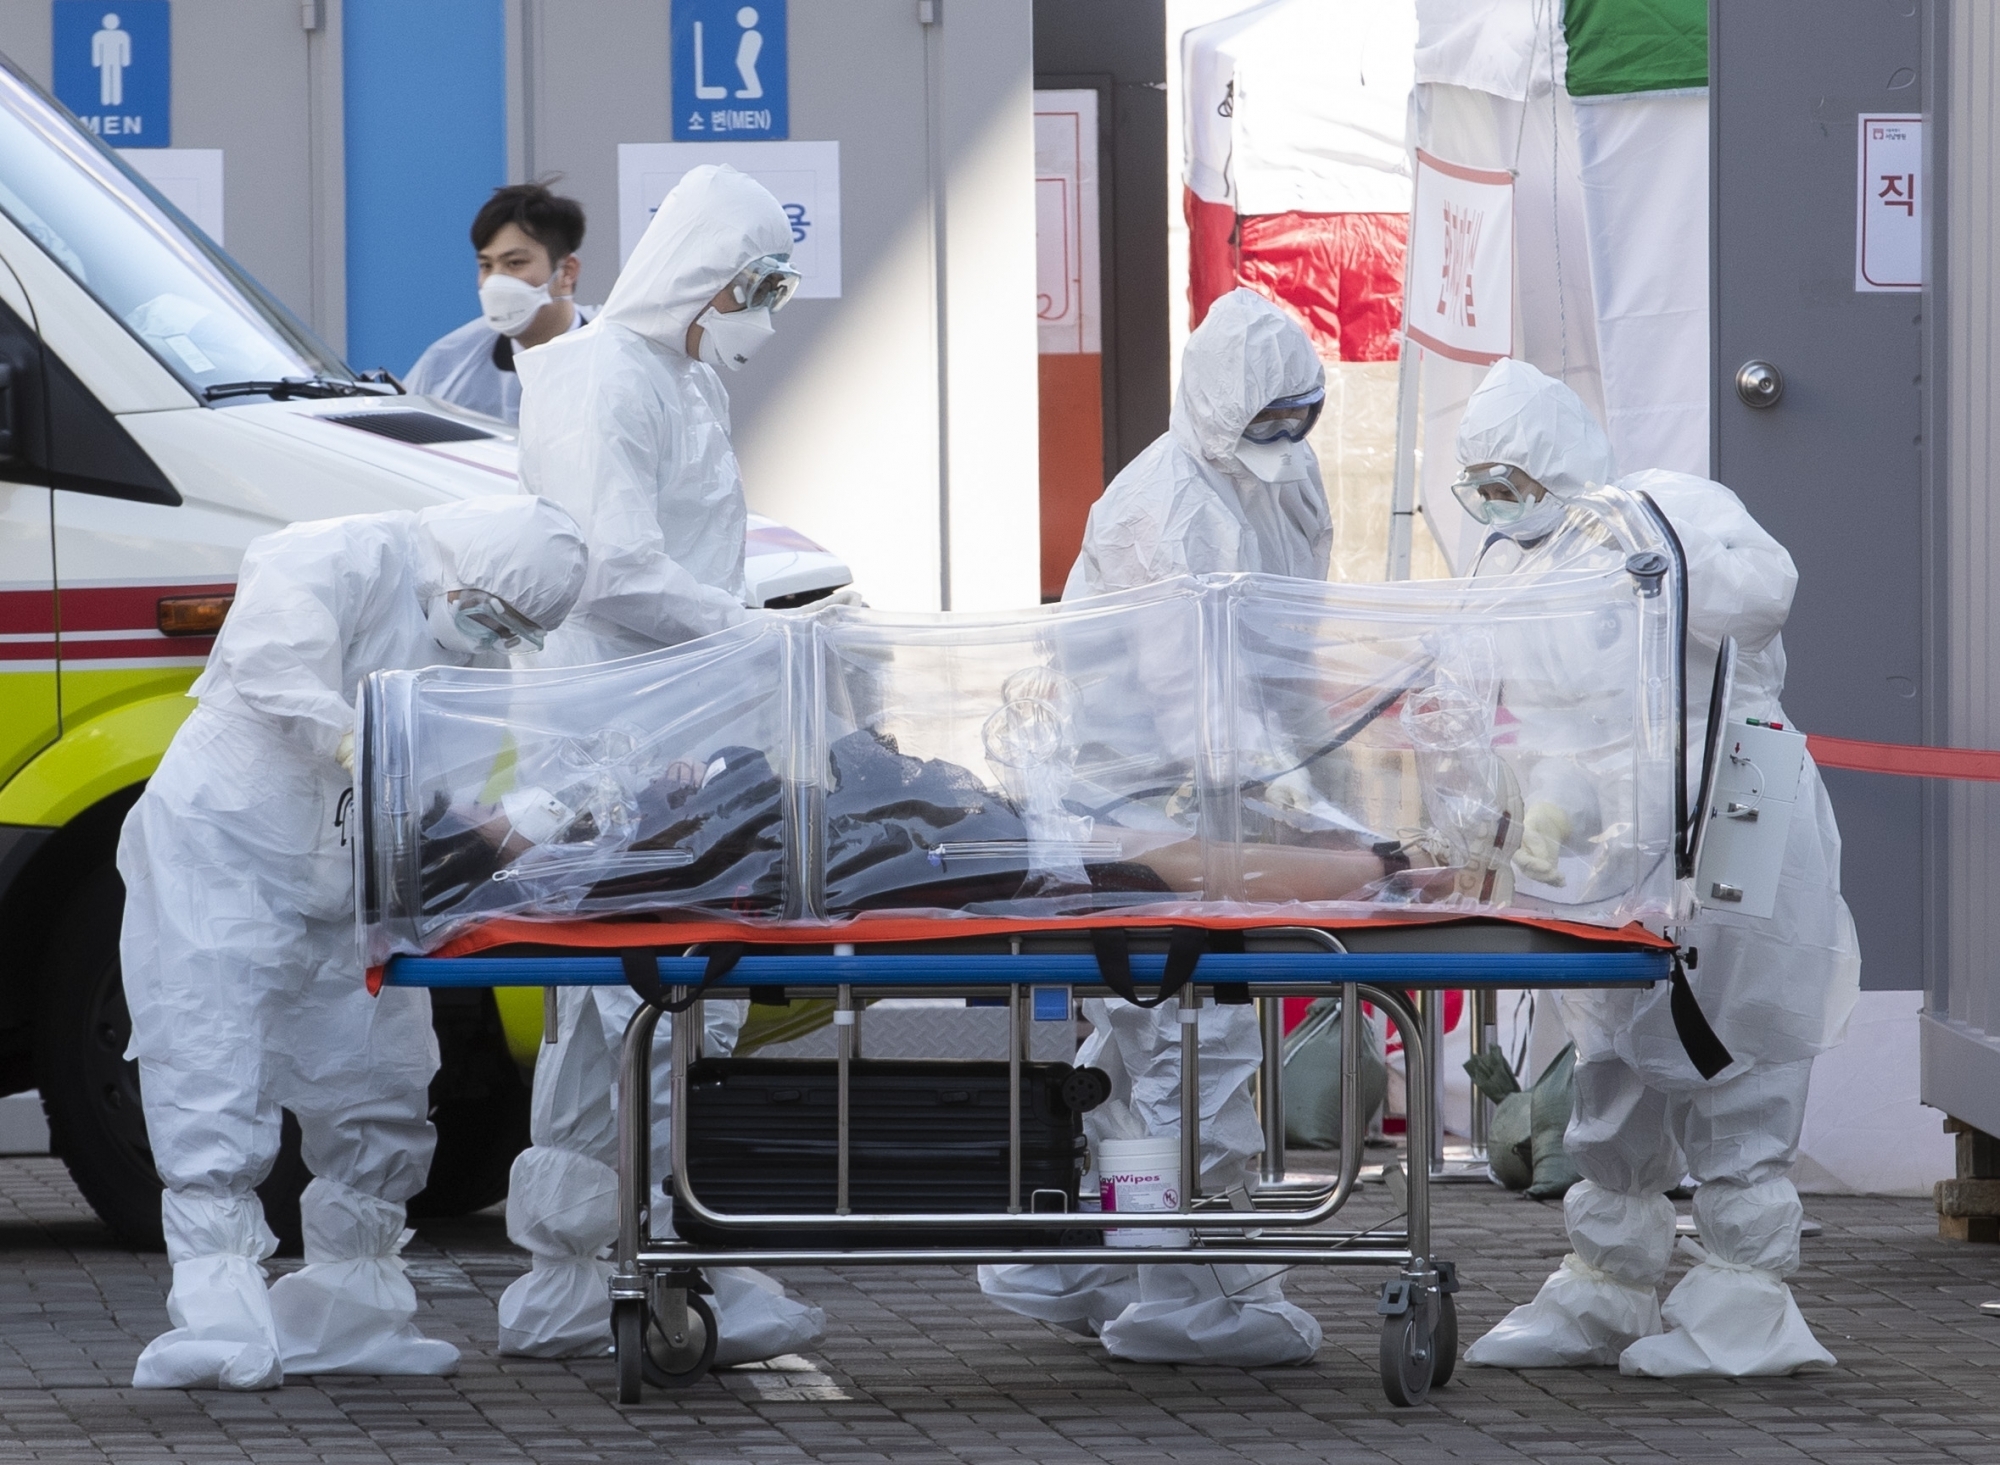 Italy's death toll from coronavirus close to 20,000